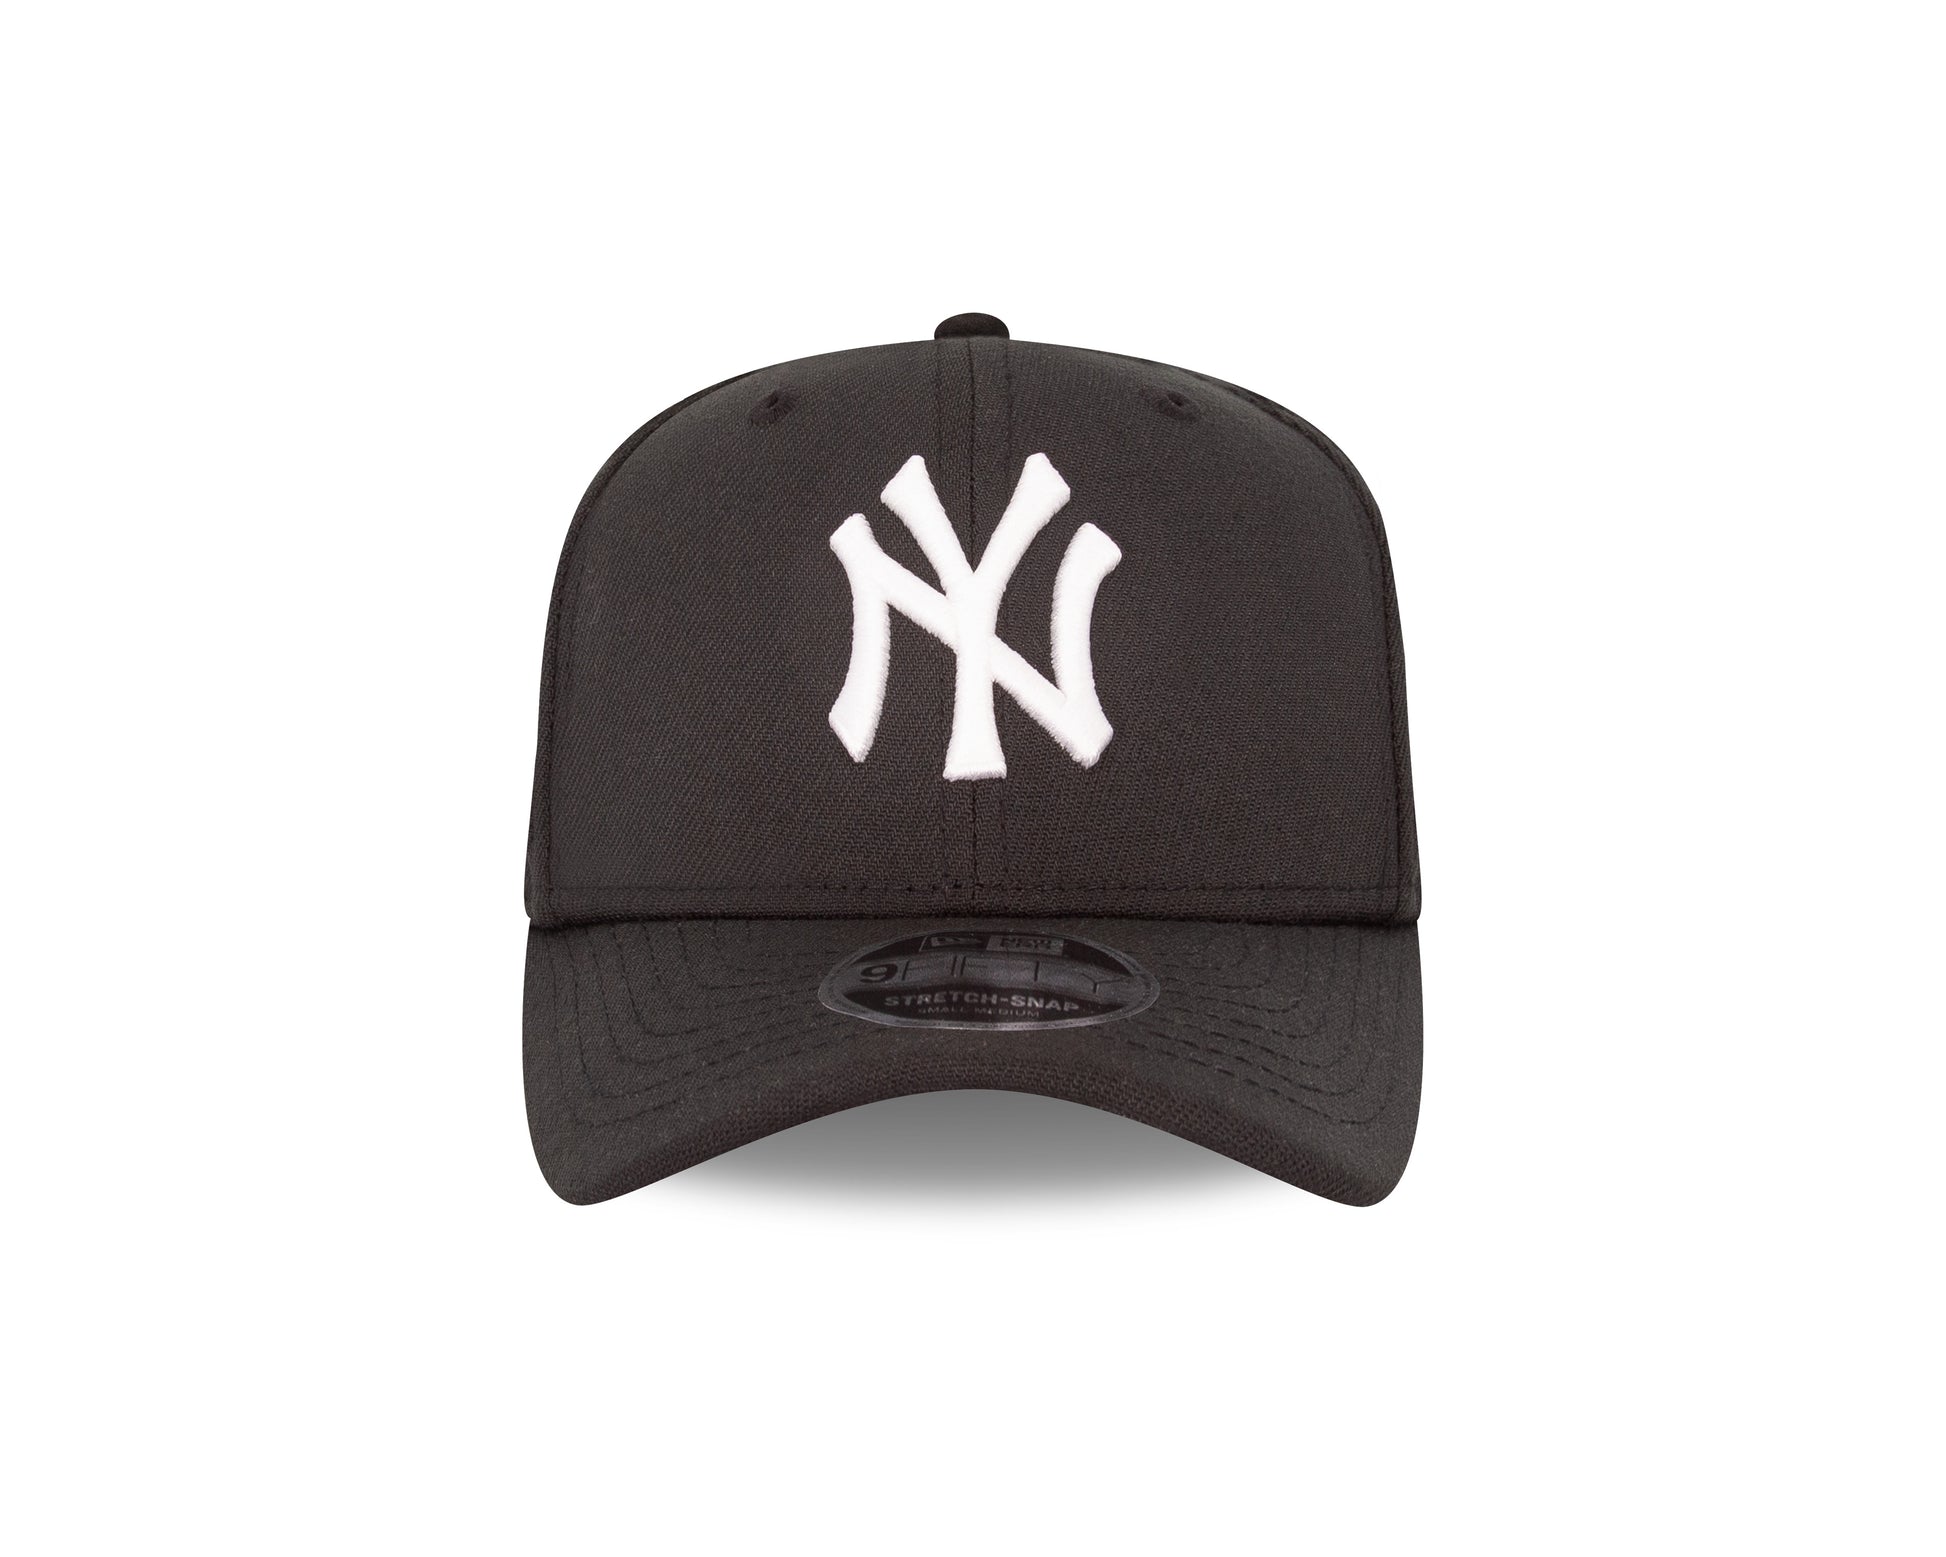 New York Yankees Stretch 9Fifty Snapback - Sort - Headz Up 